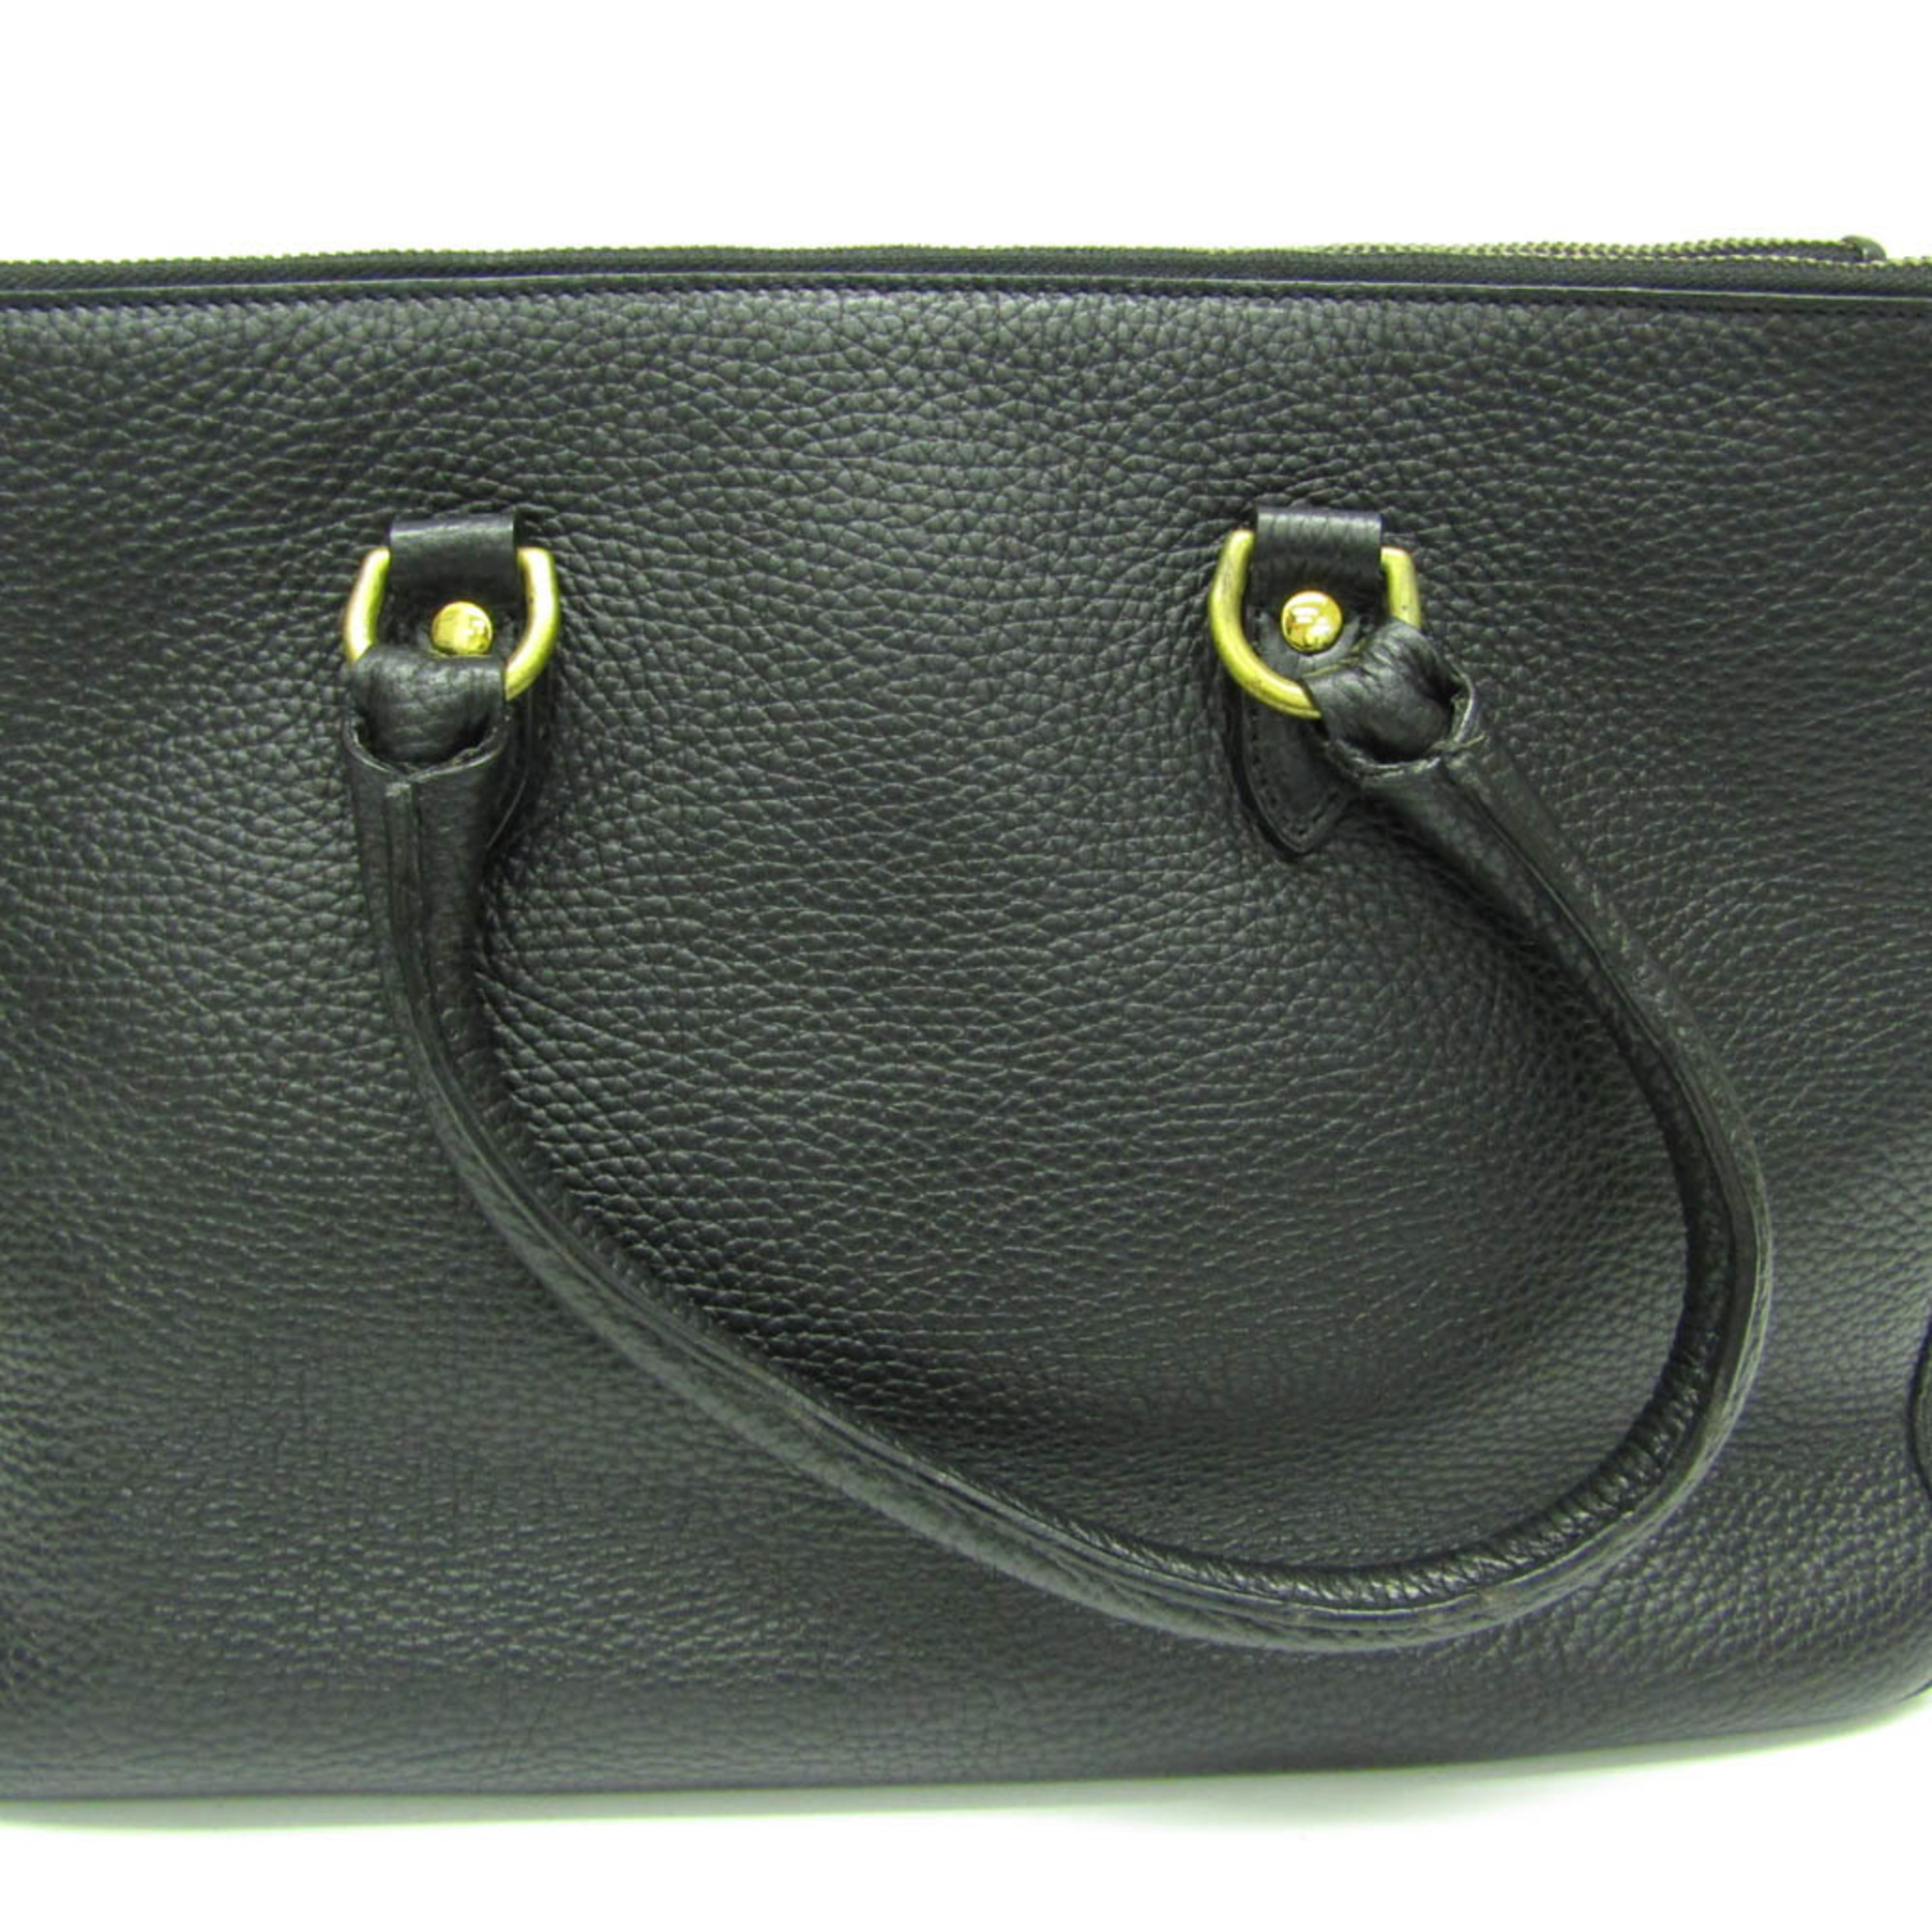 J&M Davidson SIGRID Women's Leather Tote Bag Black